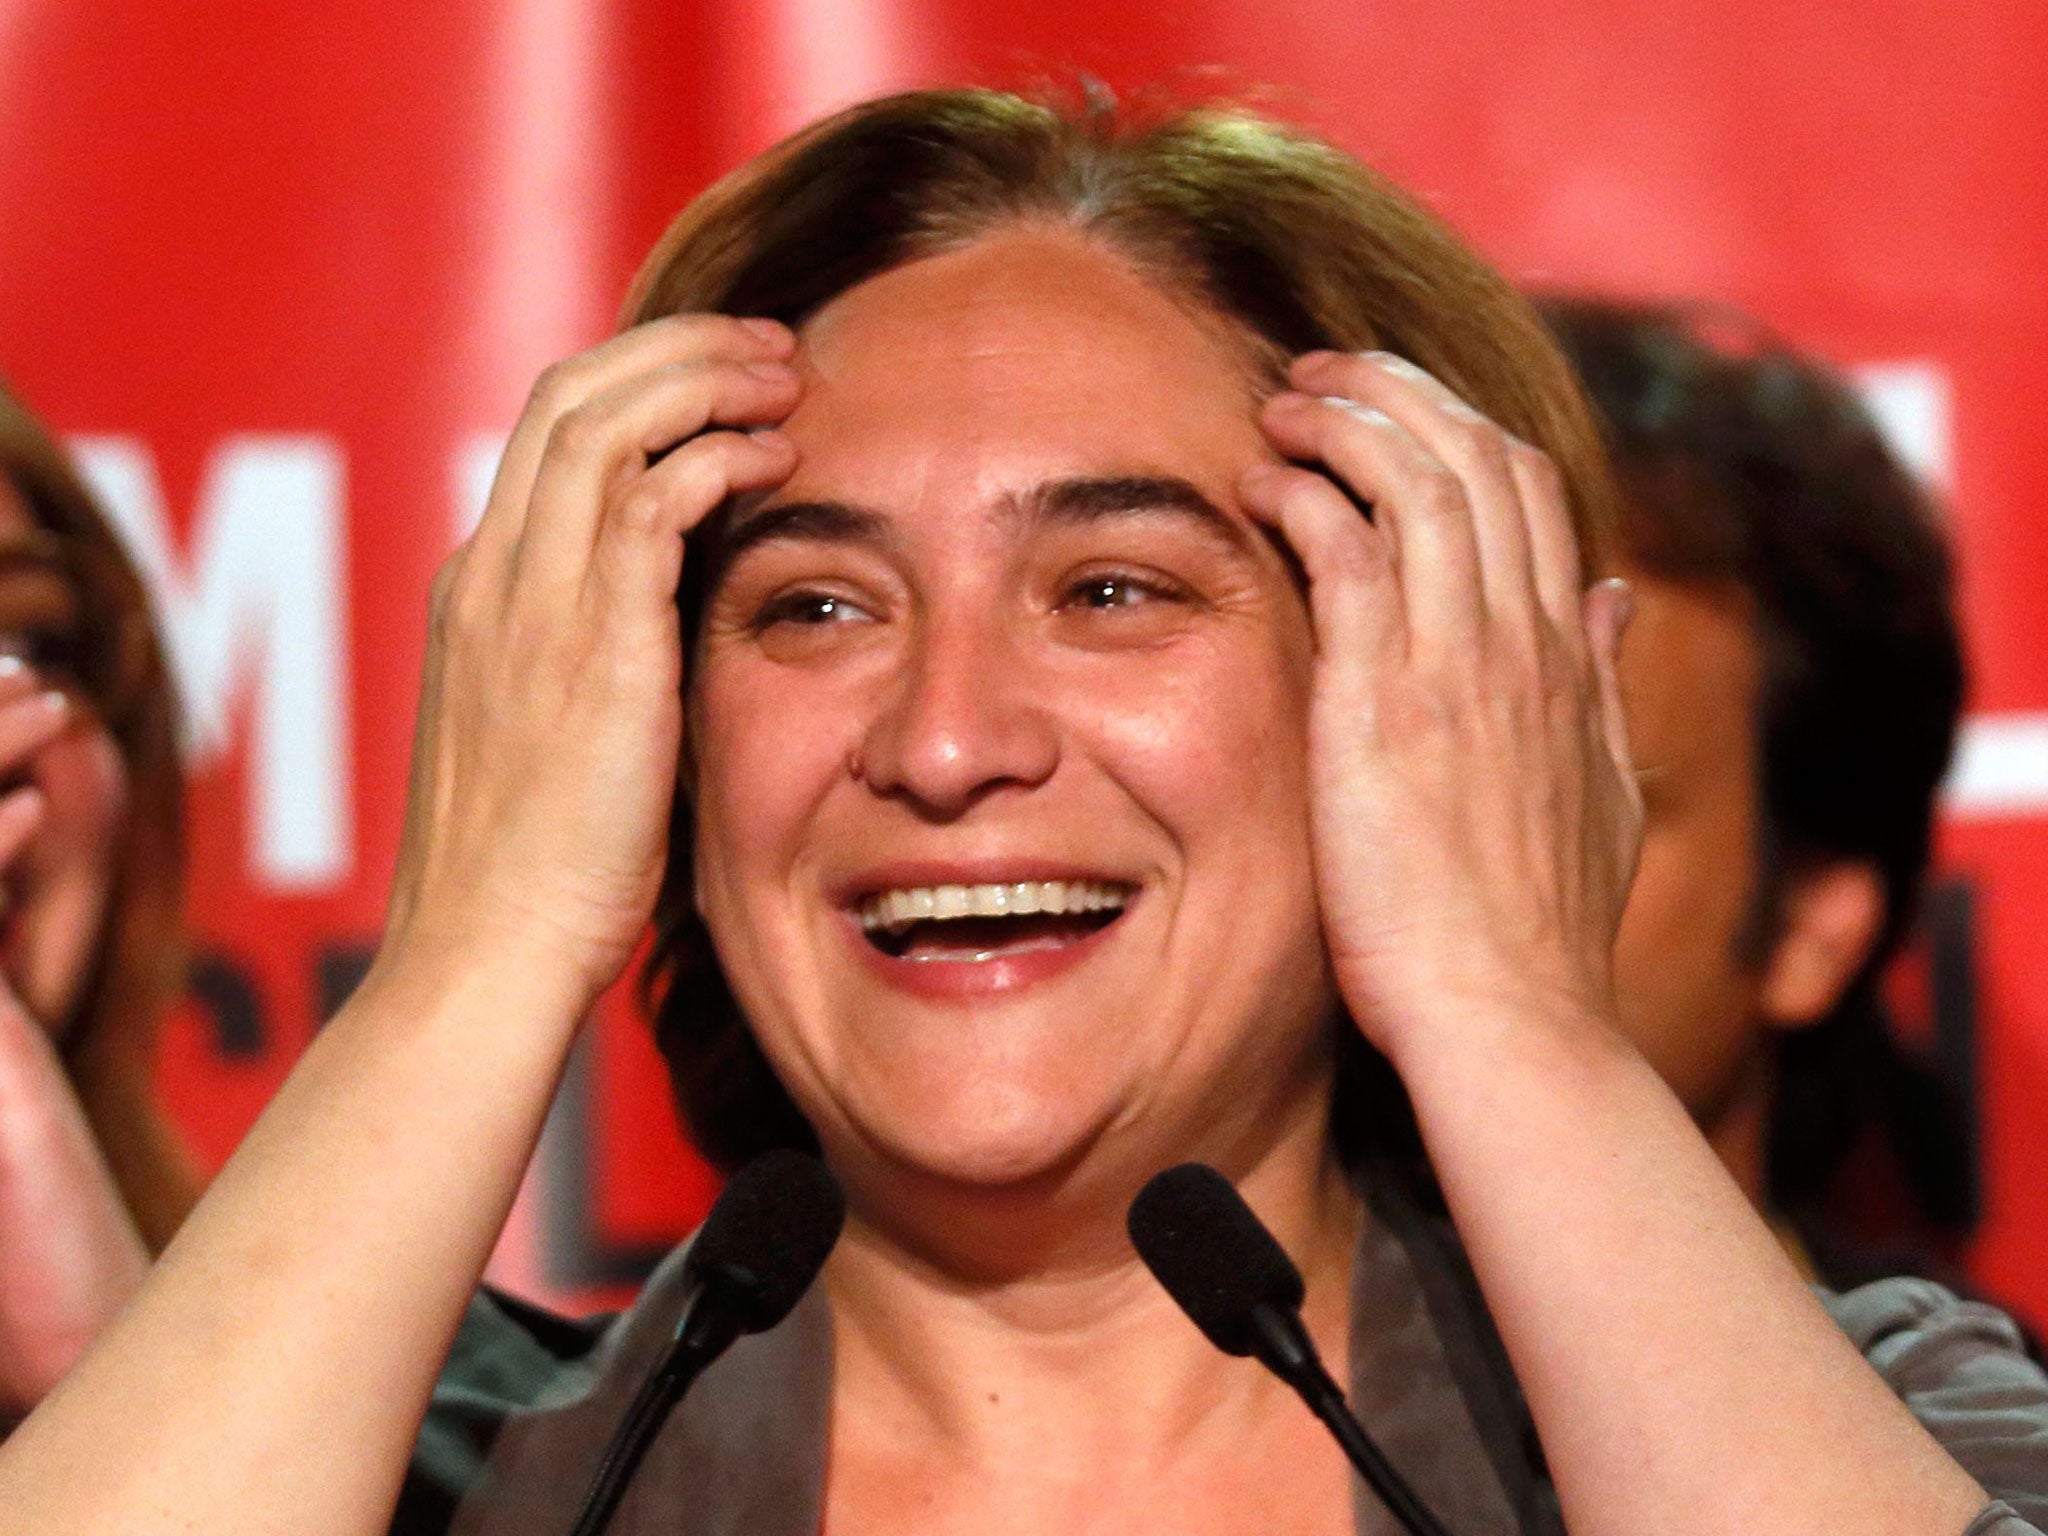 Ada Colau celebrates her victory in Barcelona